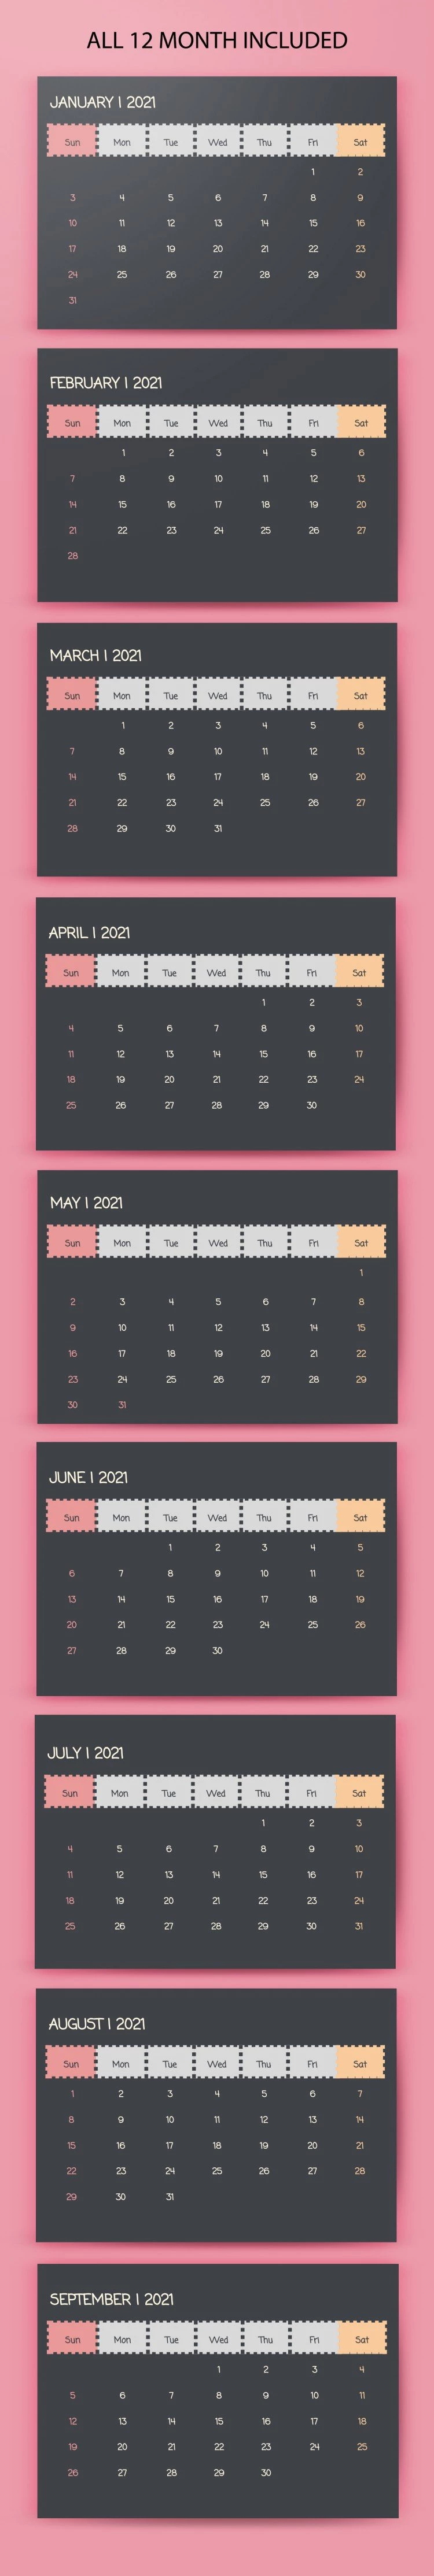 Yearly Desk Calendar 2021 - free Google Docs Template - 10061610